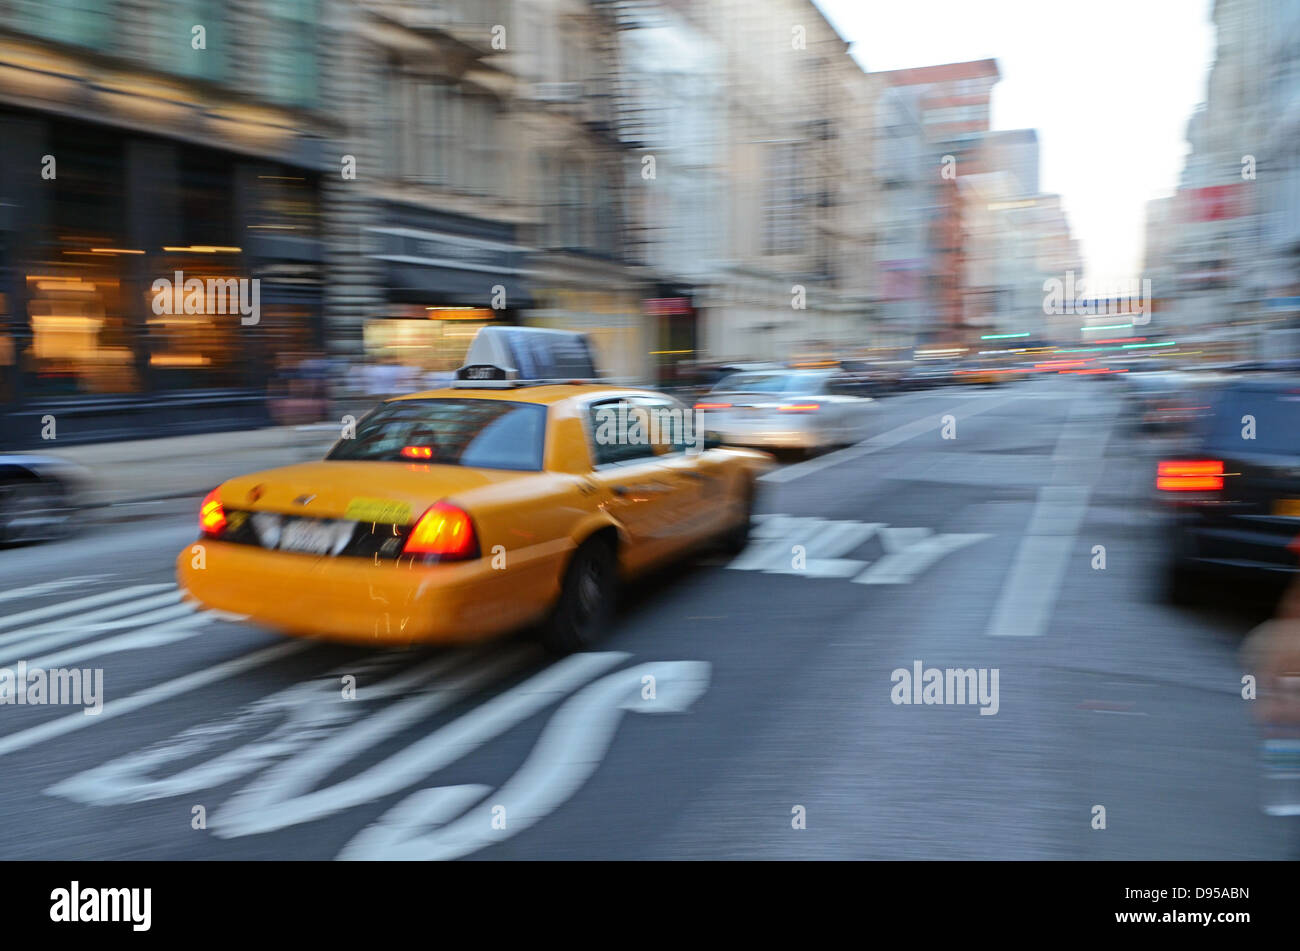 Yellow Cabs in SoHo area, Manhattan, New York City Stock Photo